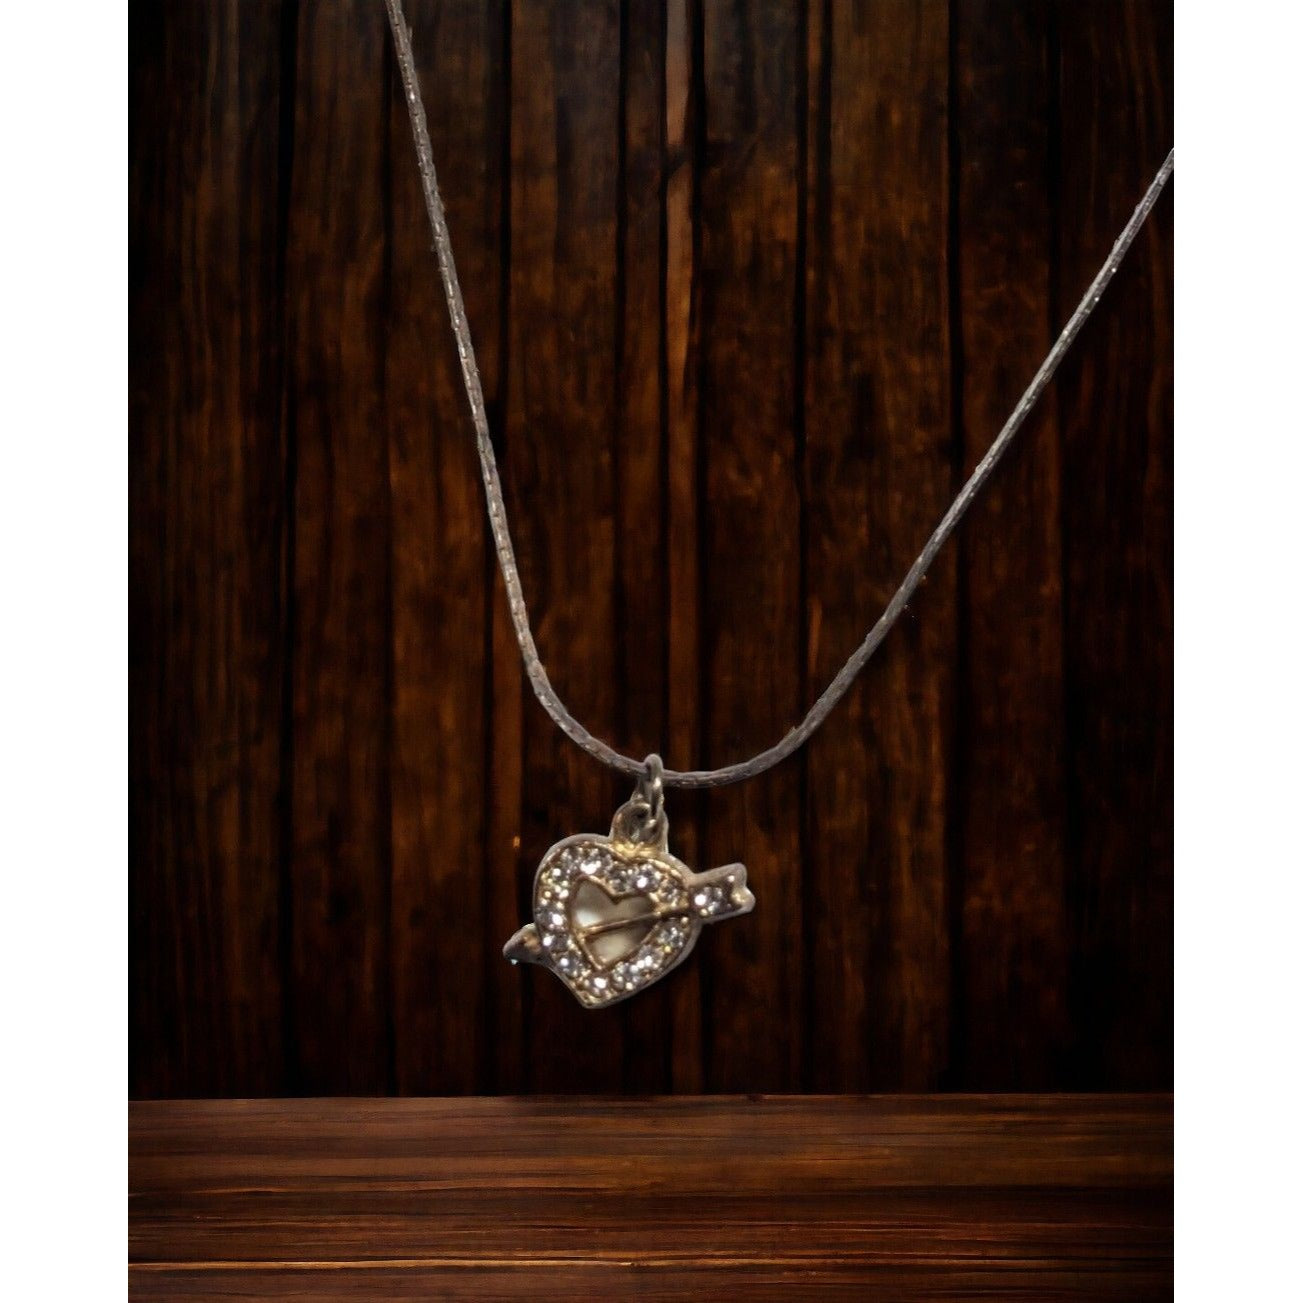 Gold Rhinestone Heart Arrow Necklace